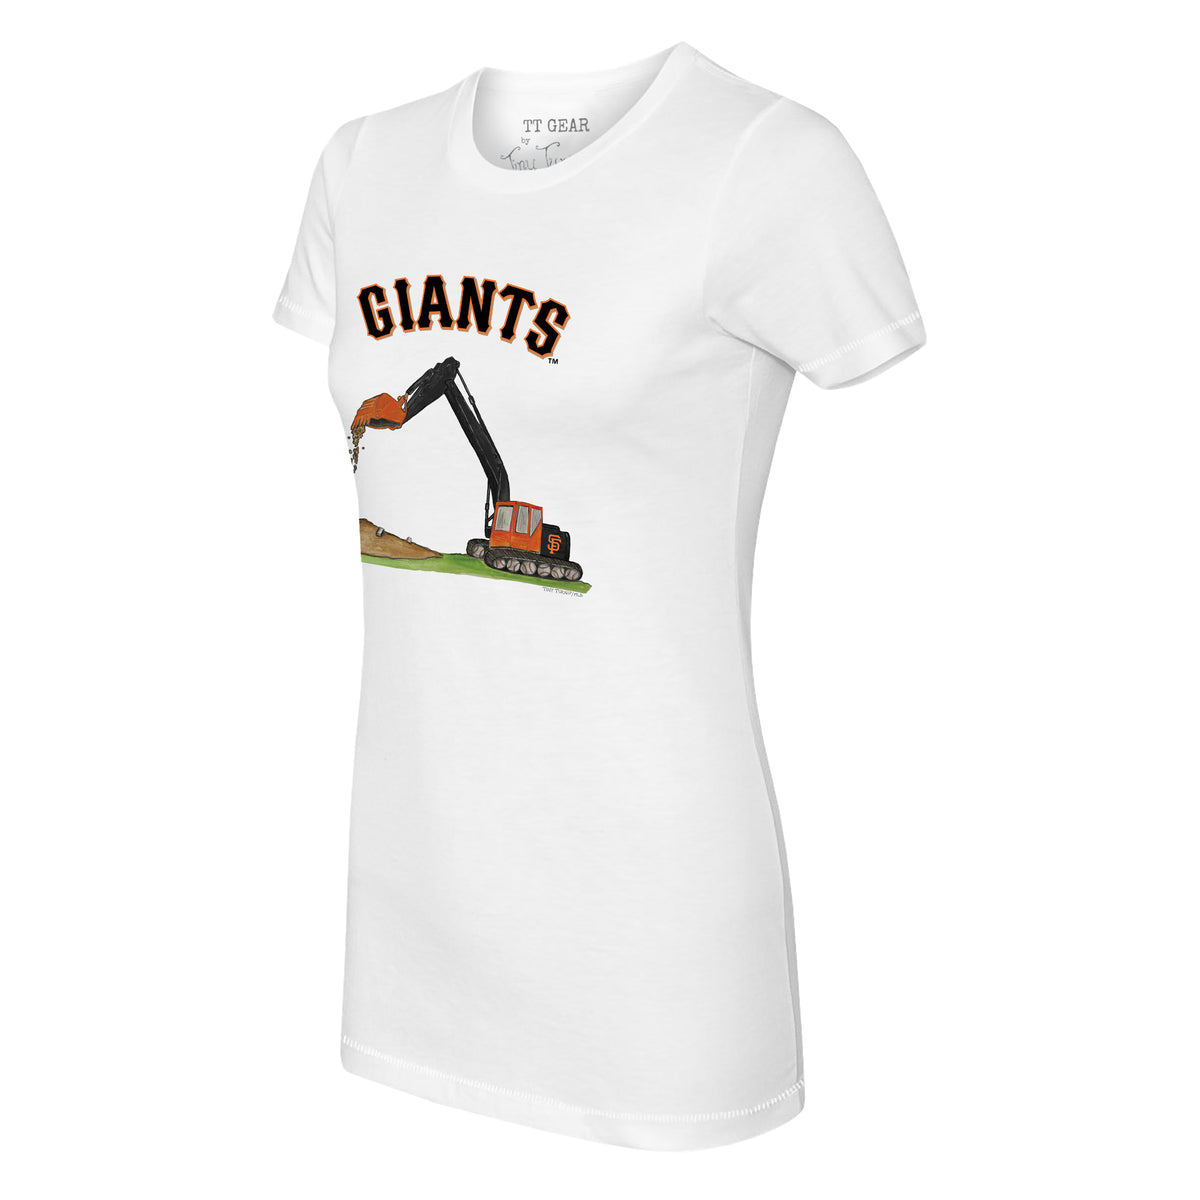 San Francisco Giants Excavator Tee Shirt